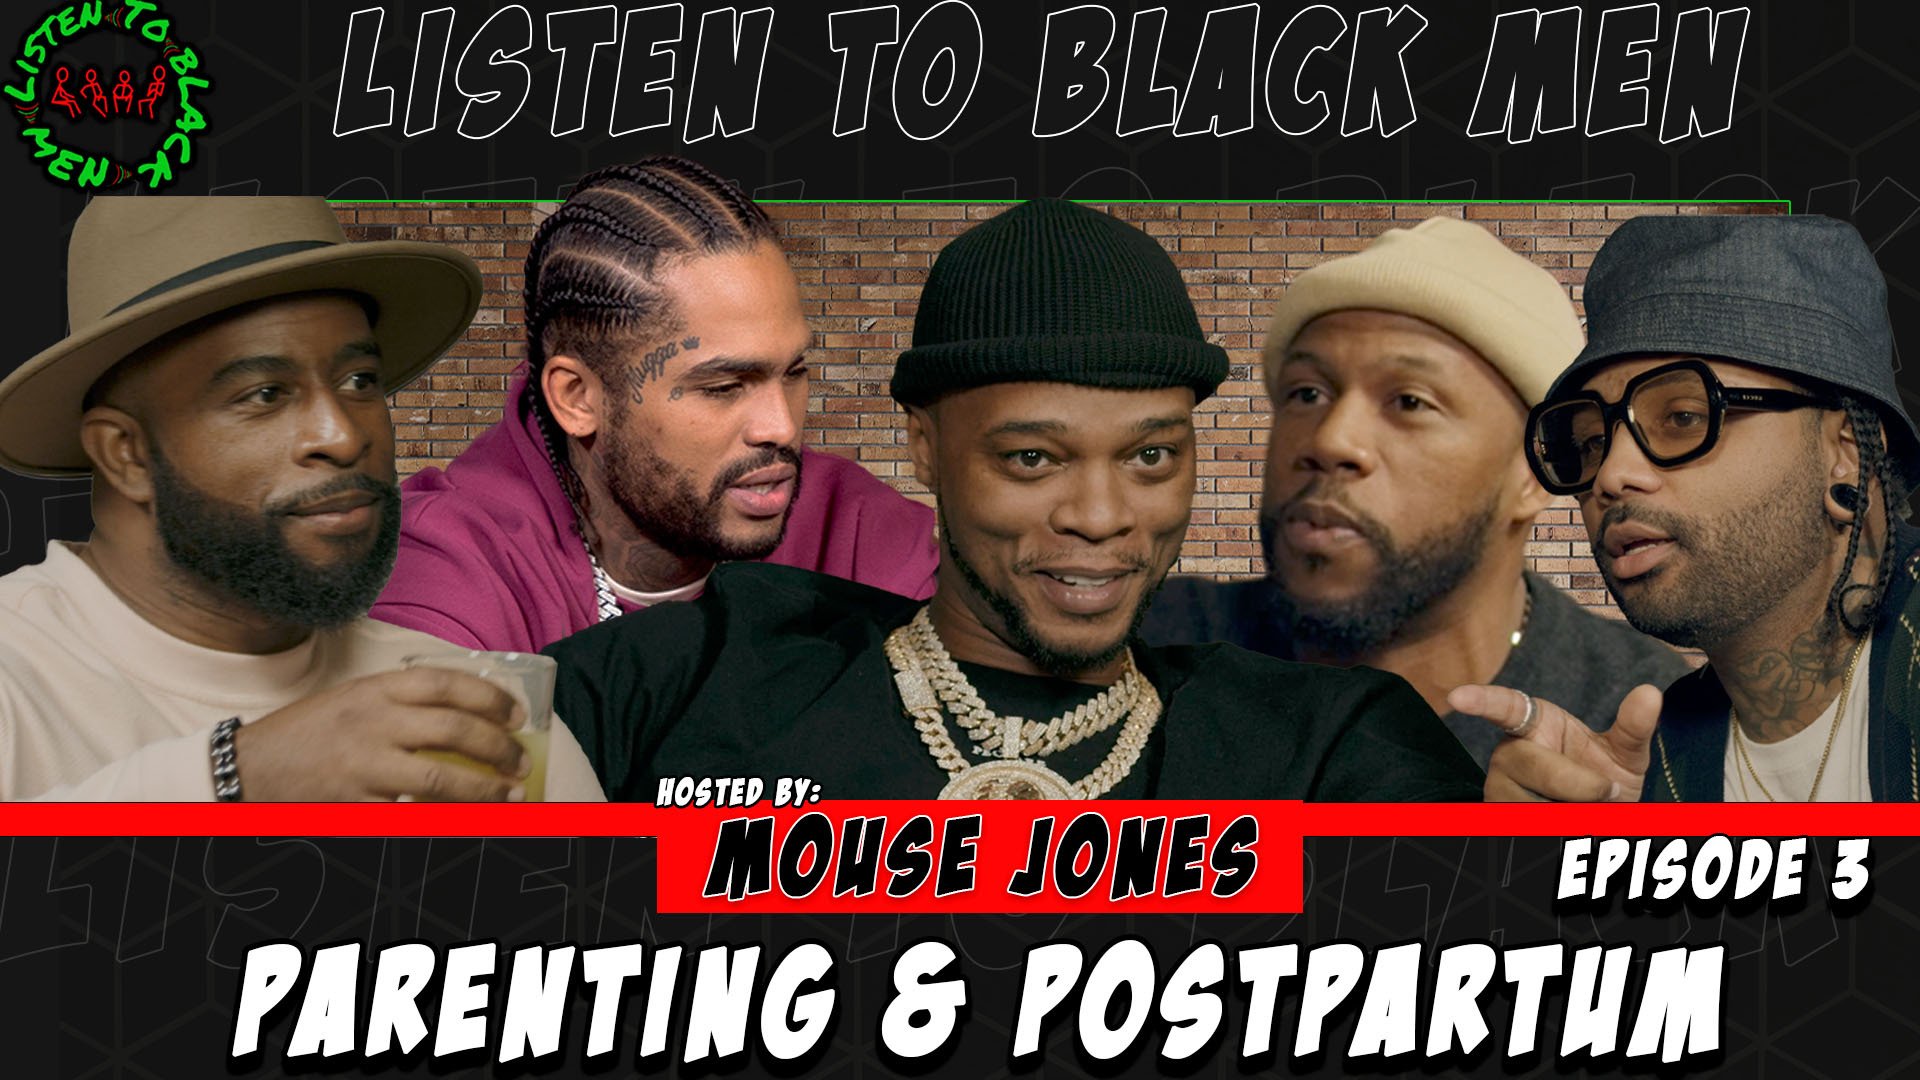 Listen to Black Men: Episode 3 - Fatherhood & Postpartum Depression (Featuring Dave East, Papoose, Jessie Woo, Mouse Jones, Jeremie Rivers, Tyler Chronicles)